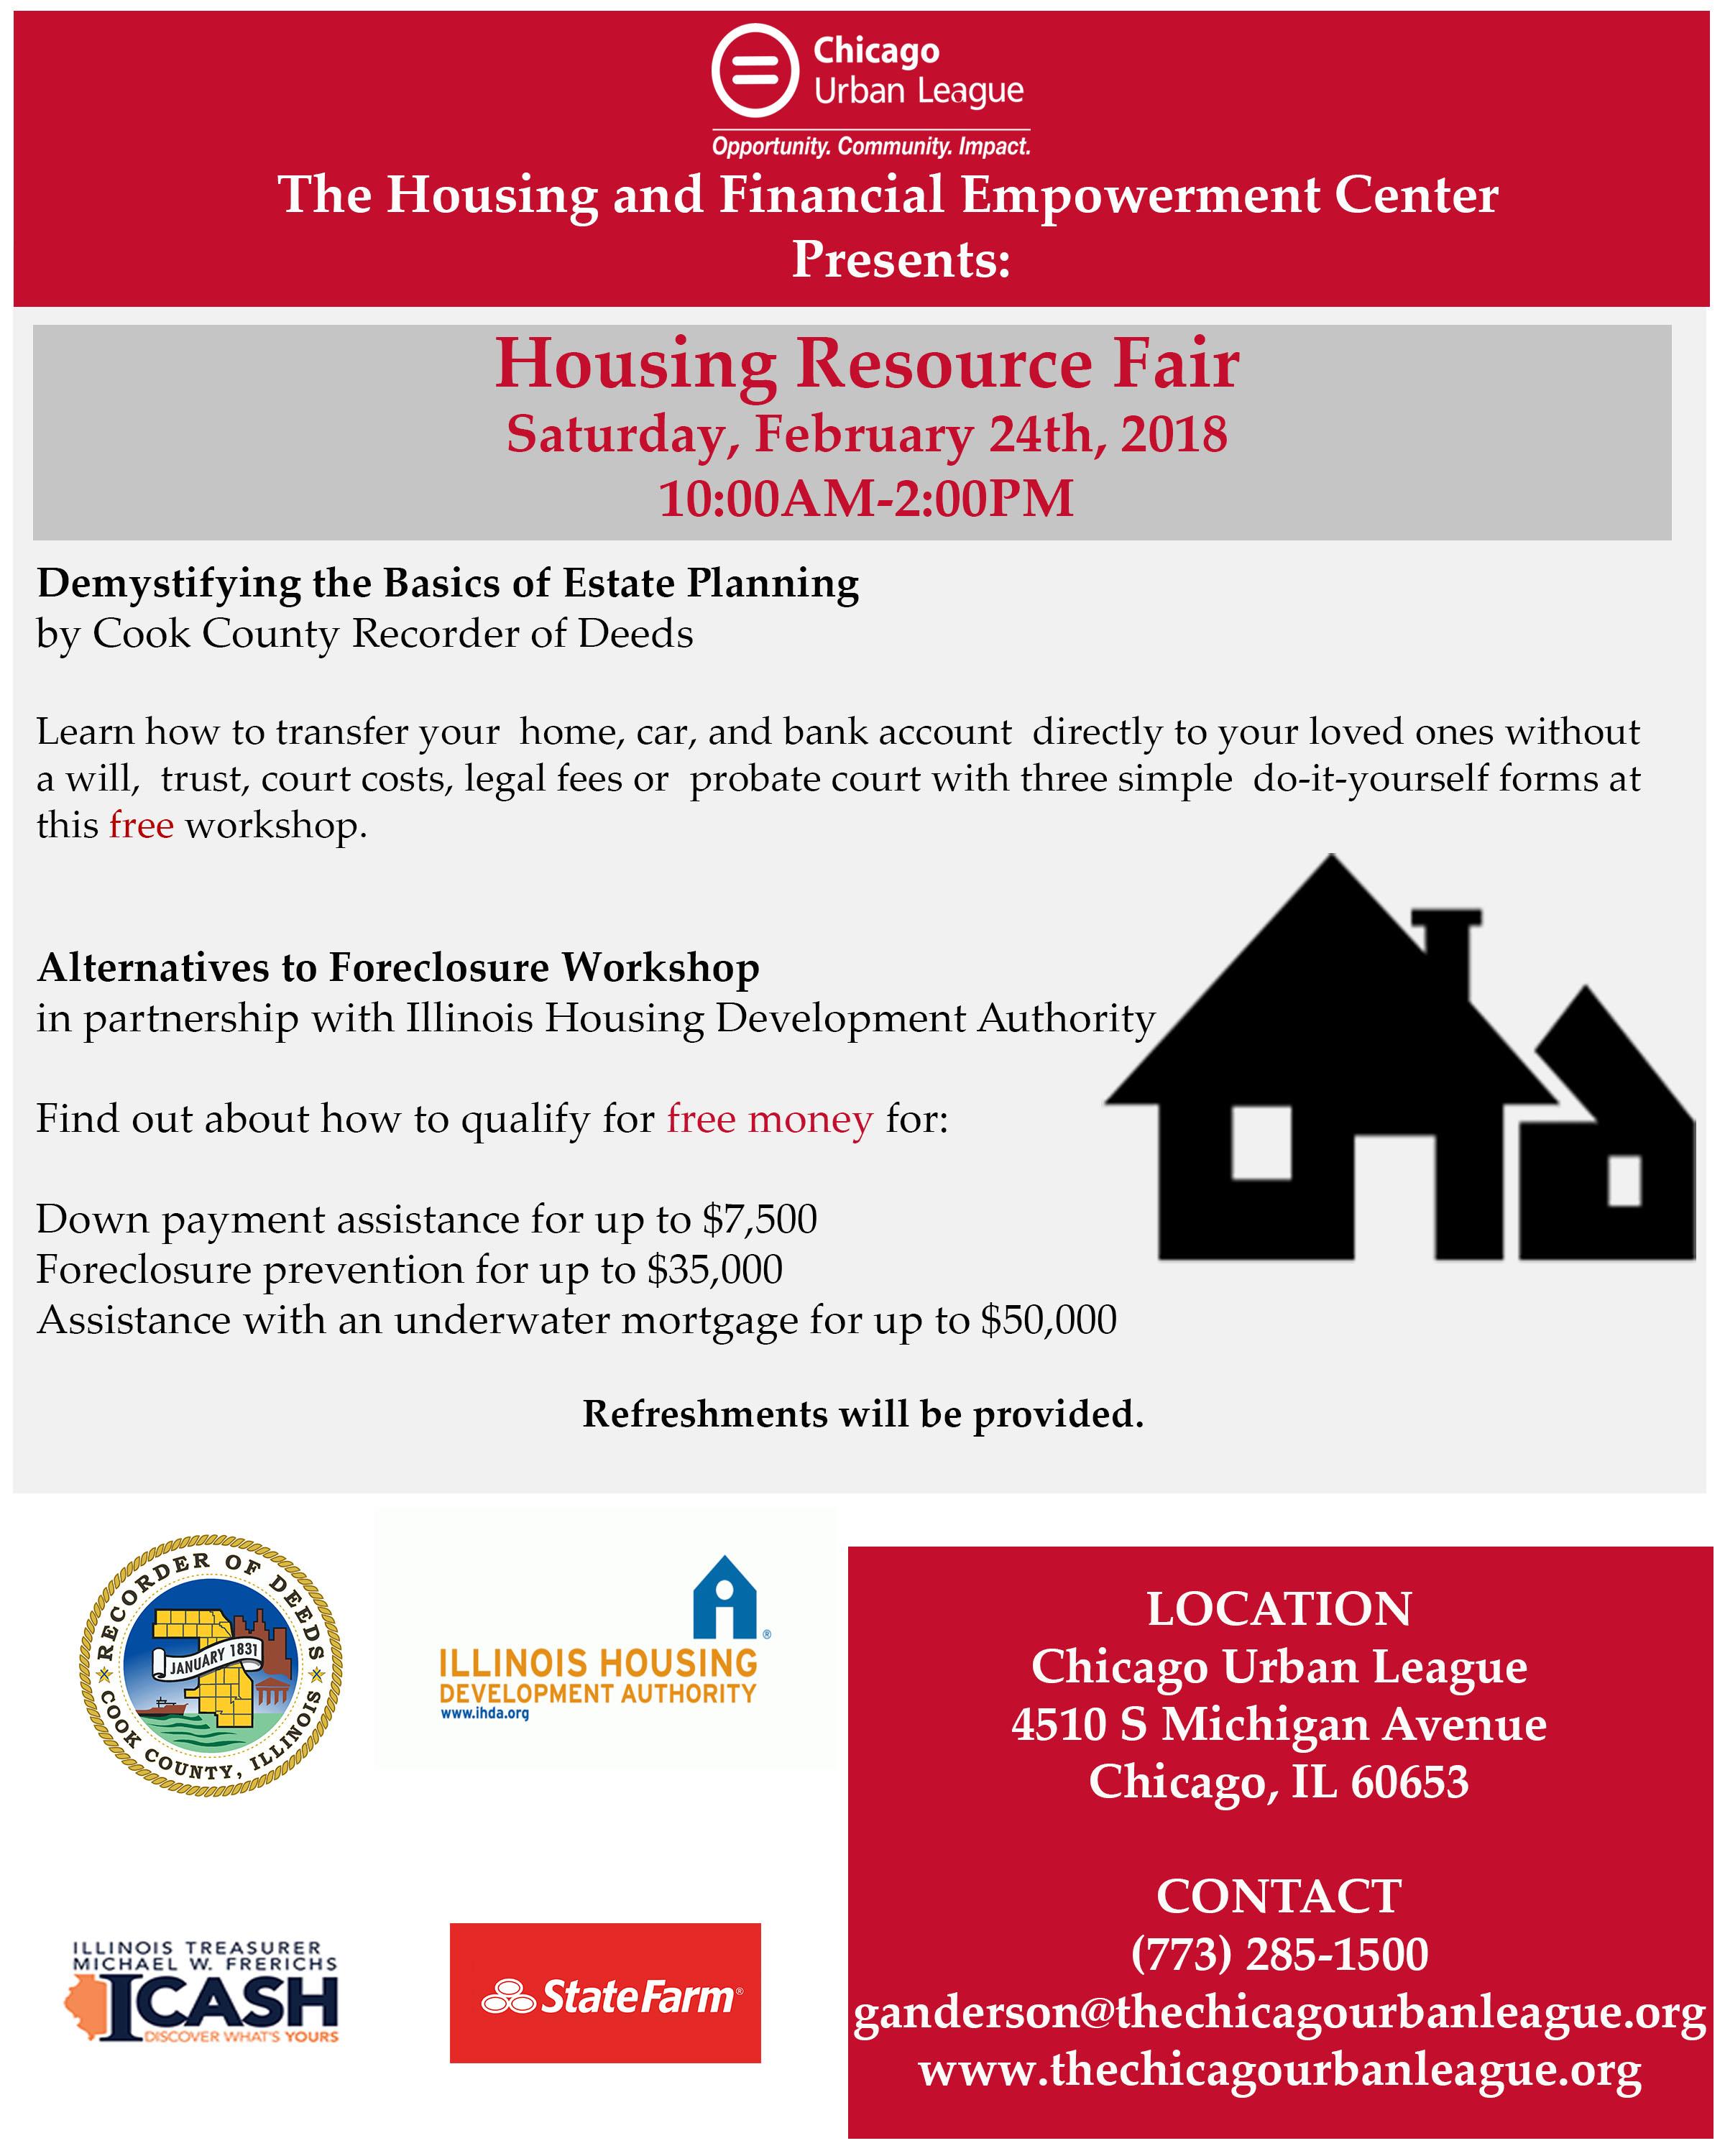 The Housing and Financial Empowerment Center Presents: Housing Resource Fair